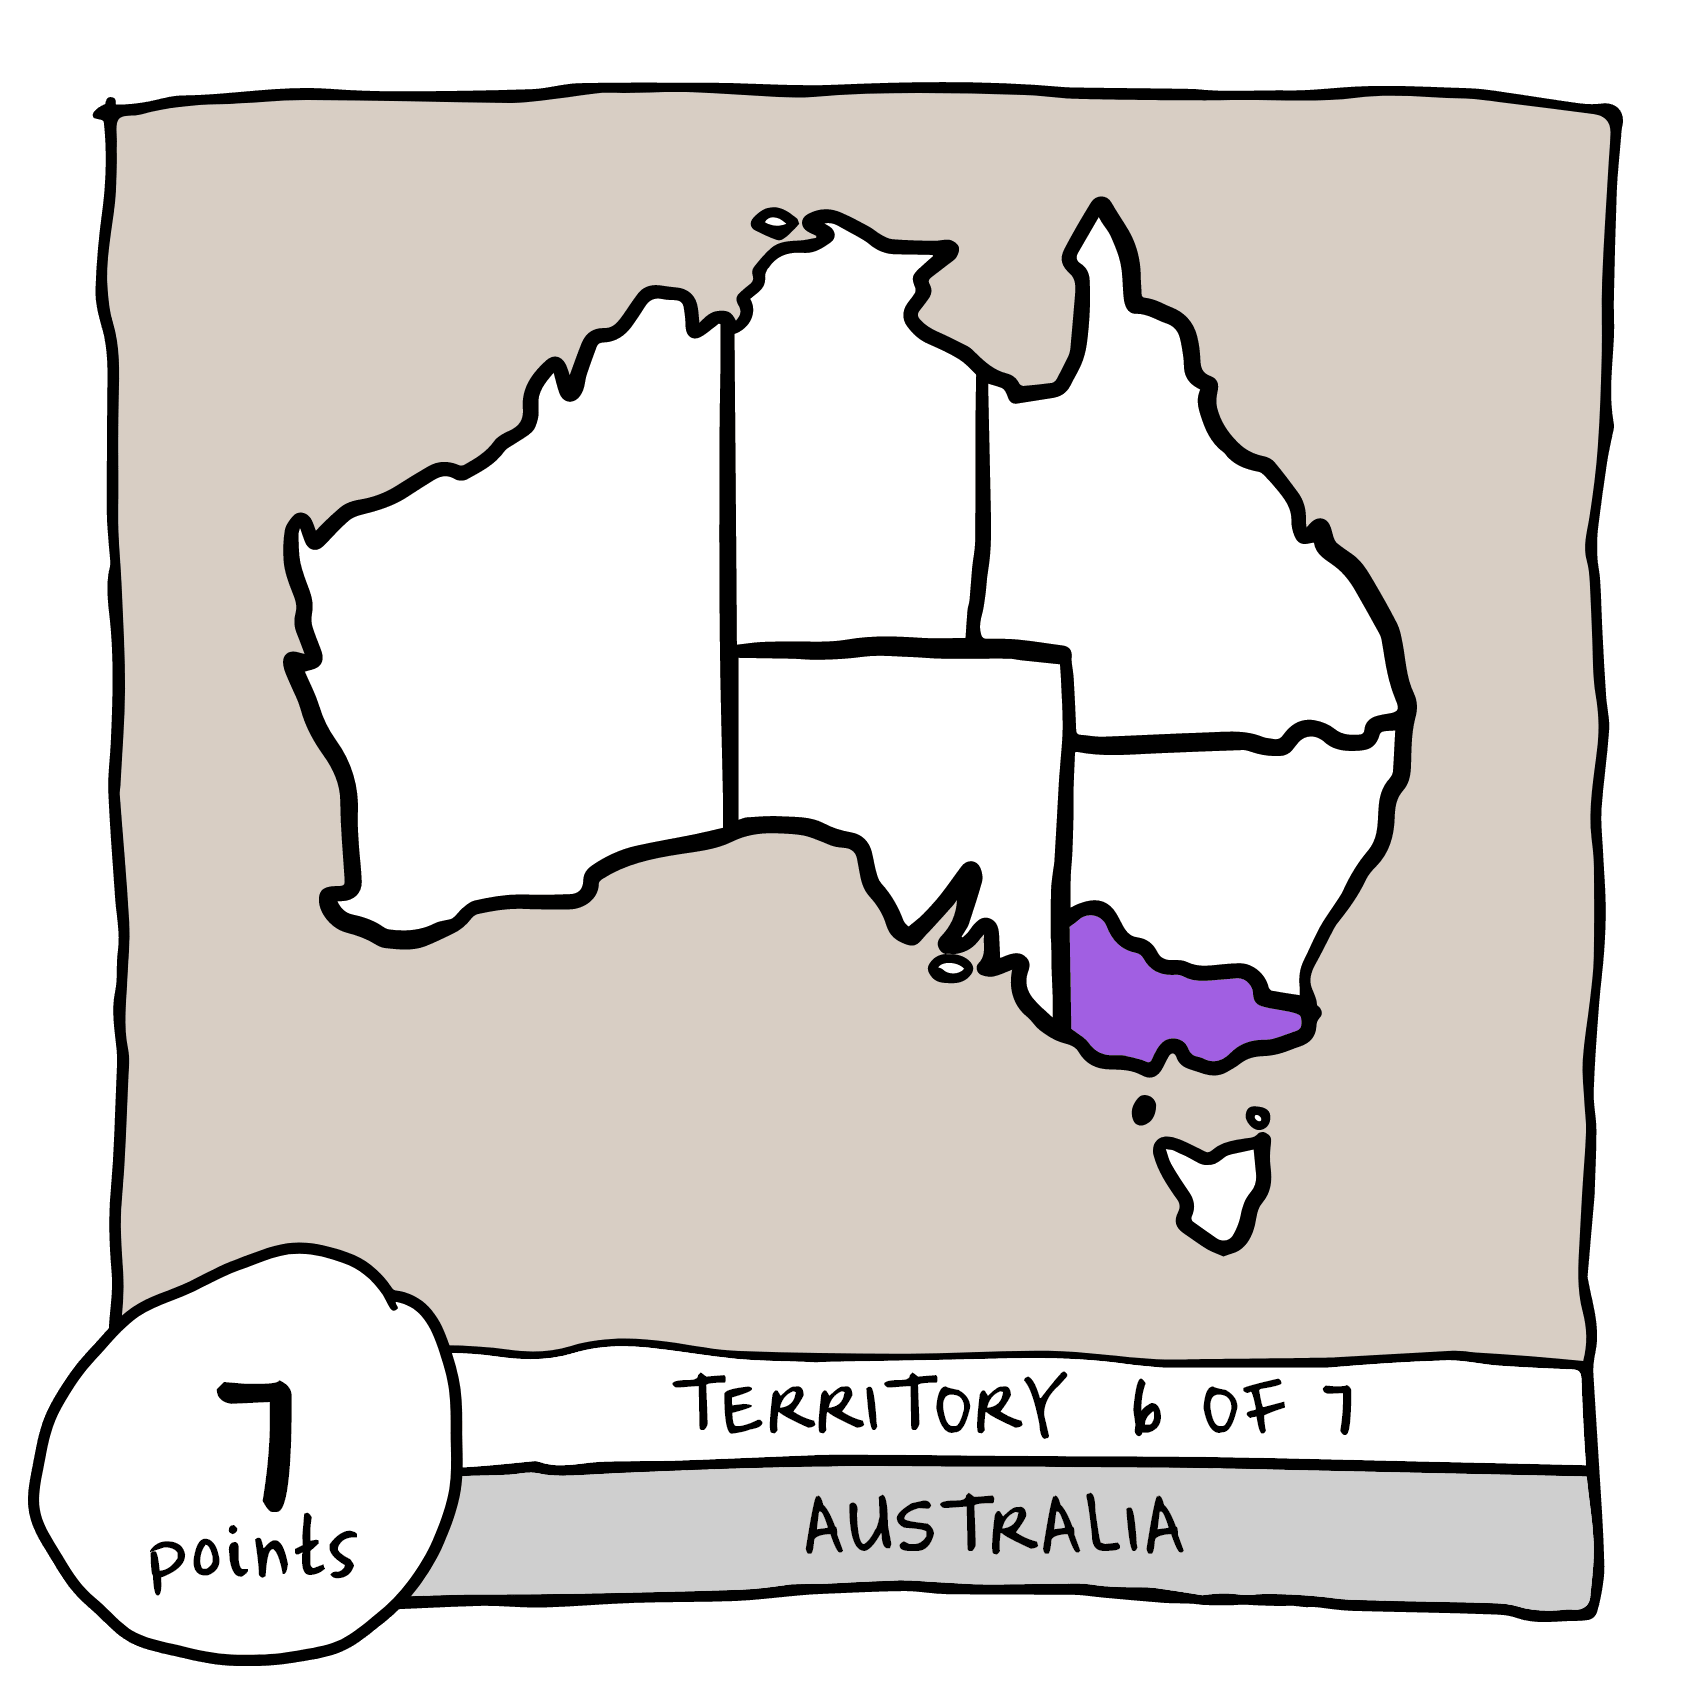 Territory 6/7 - Australia (Victoria)